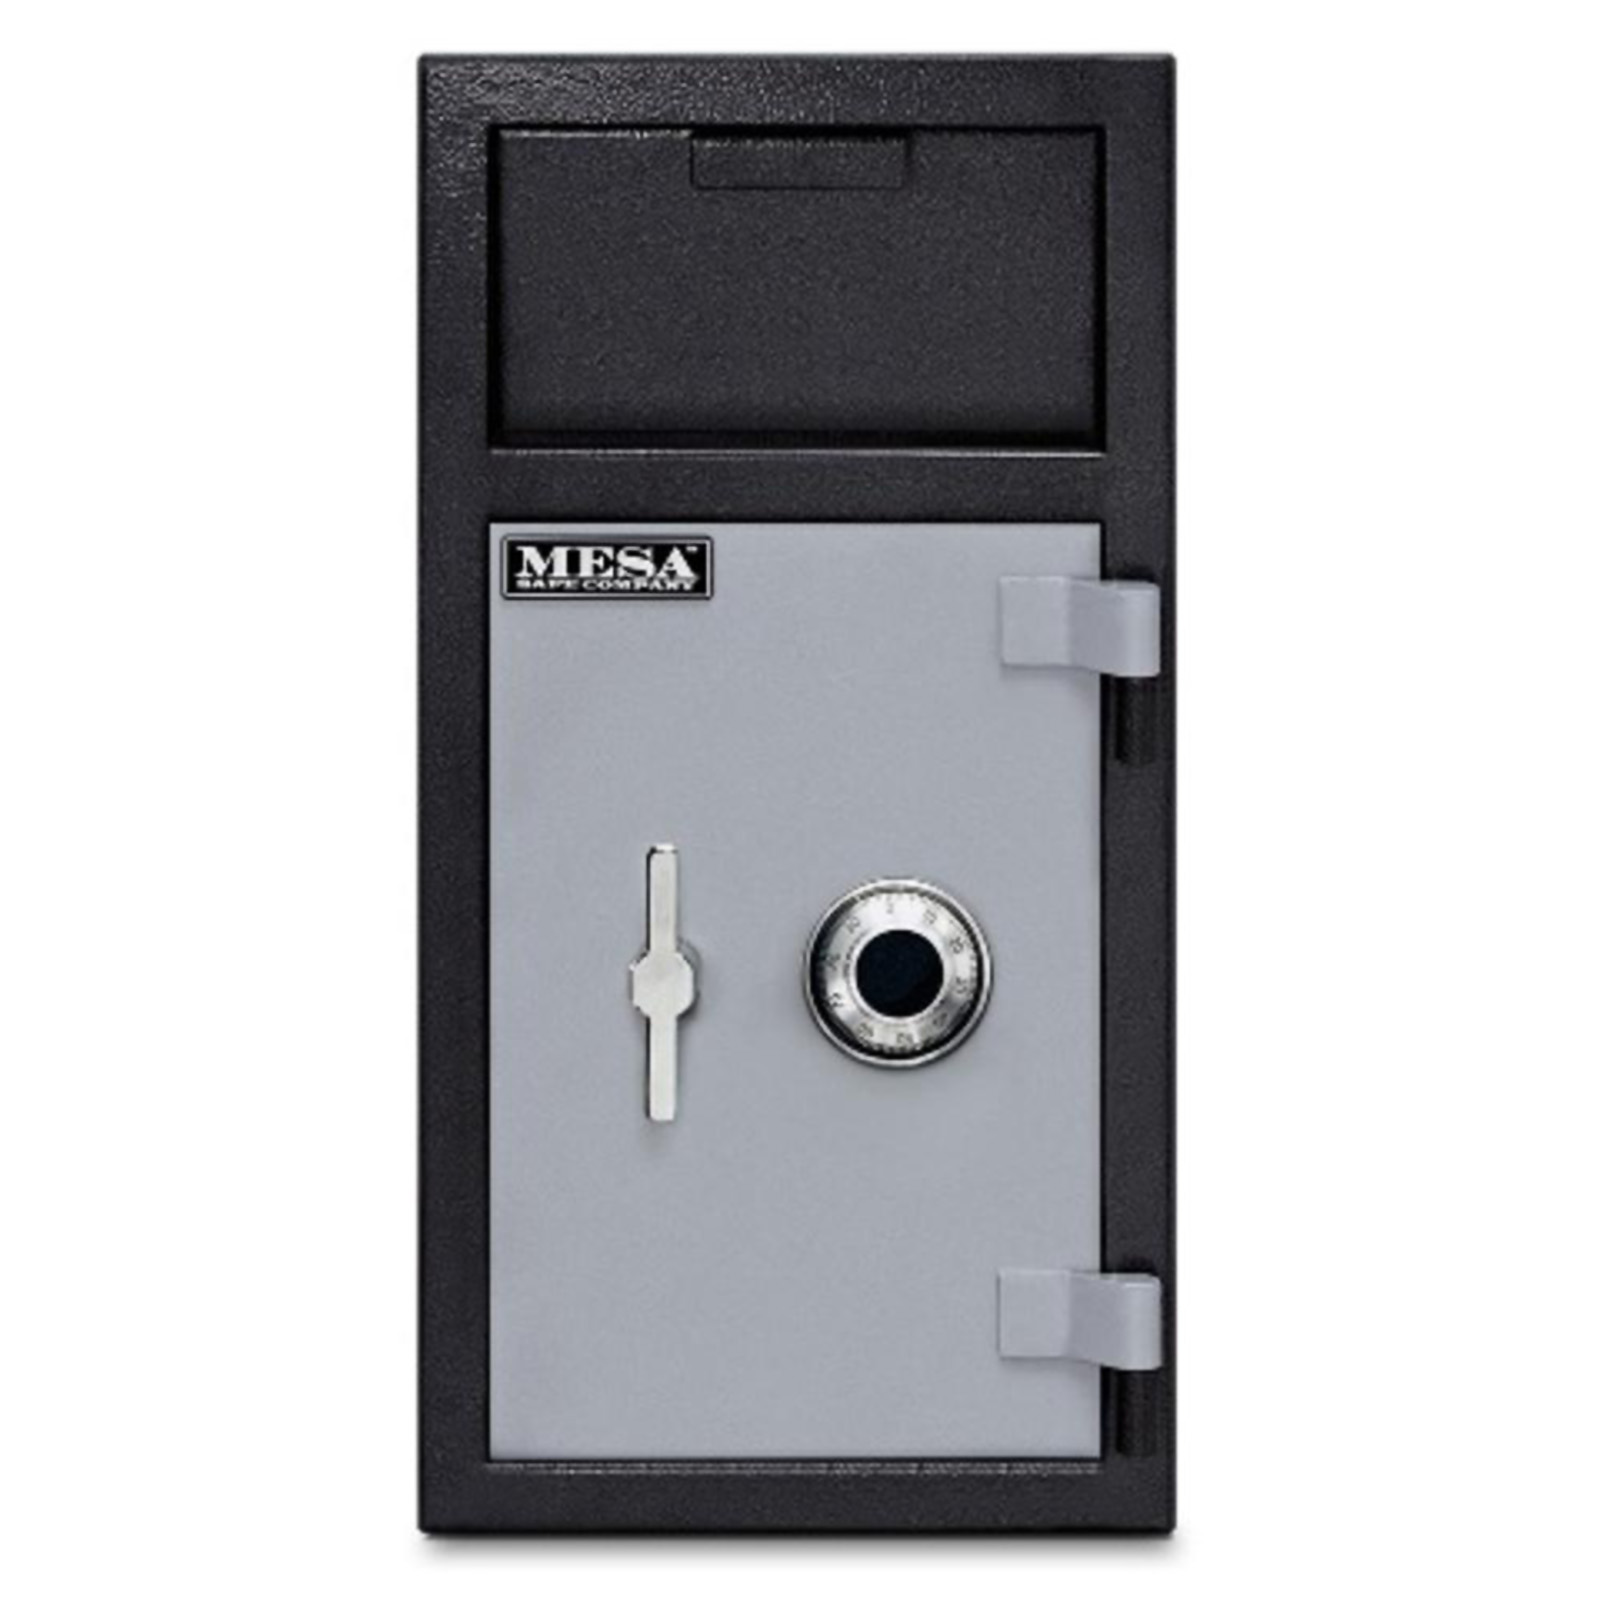 MESA SAFE COMPANY Depository Single Door Safe with Inner Locker Combination Dial Lock